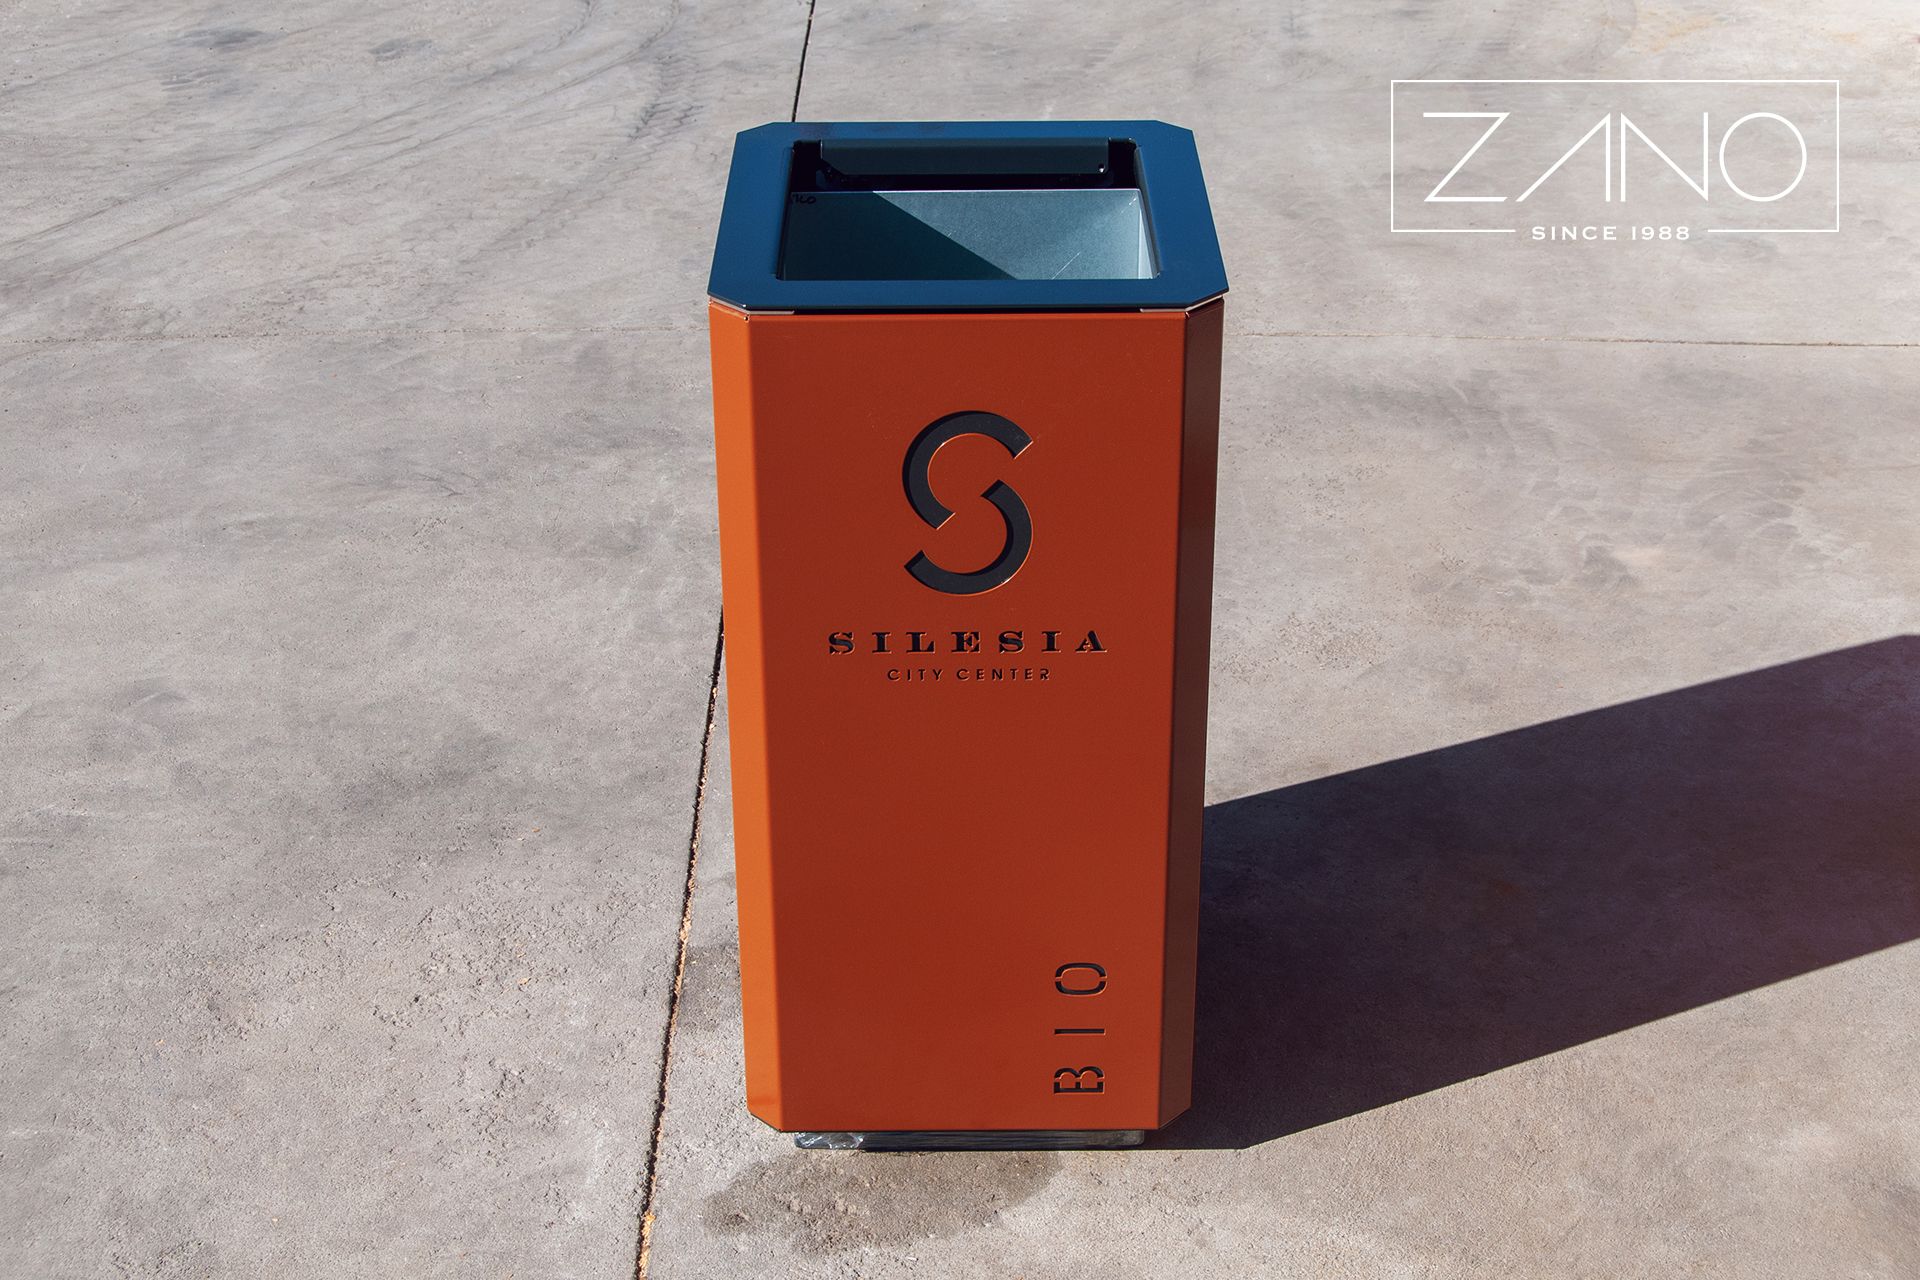 BIO waste bin | ZANO street furniture